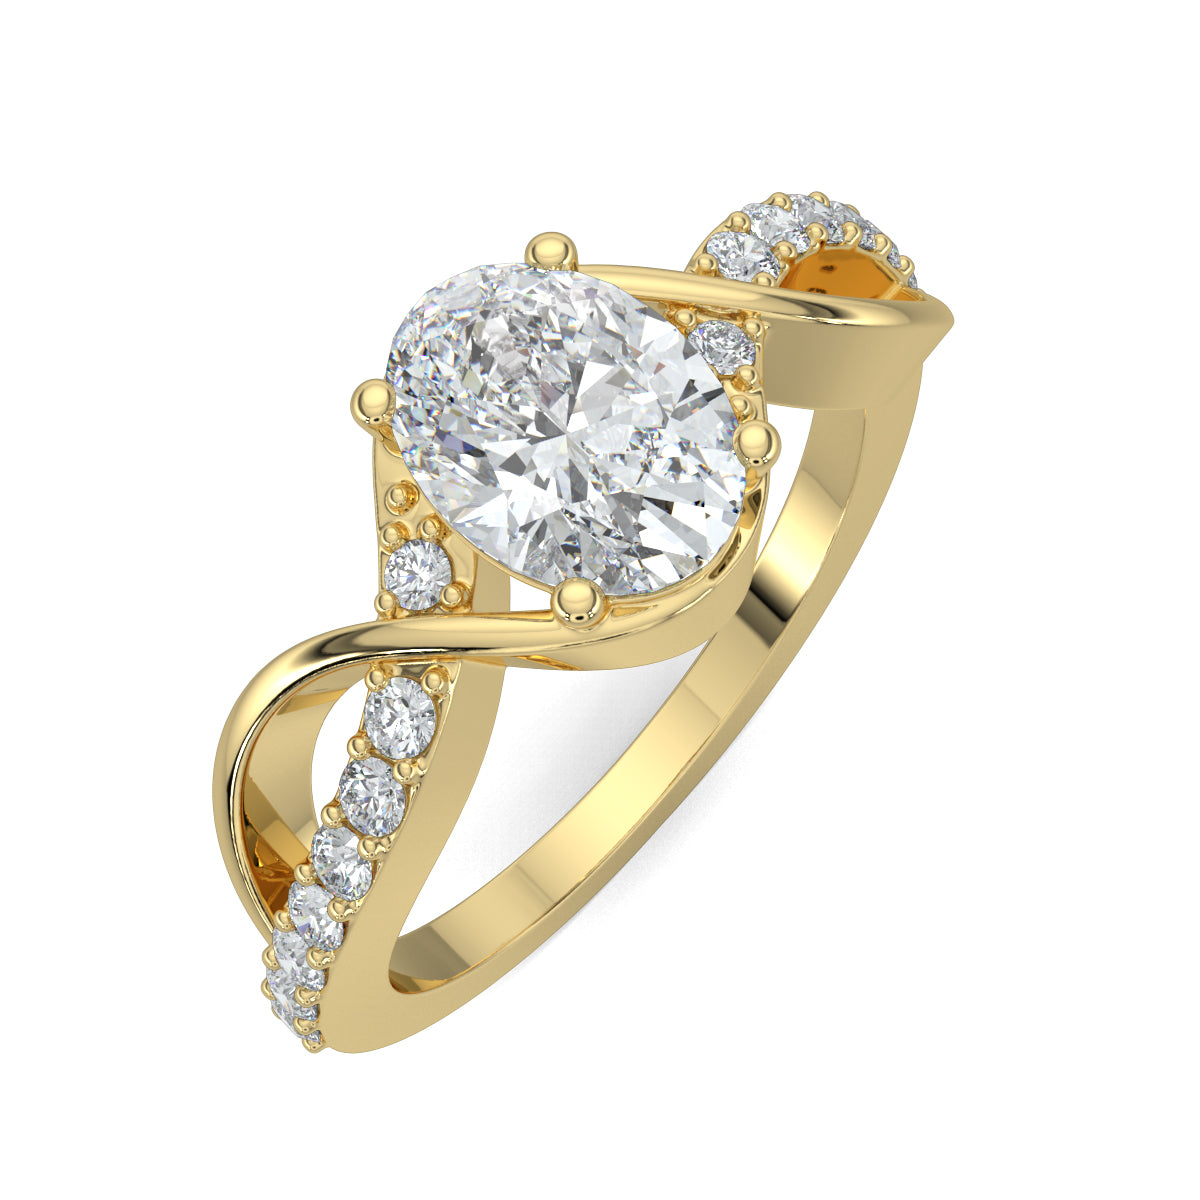 Yellow Gold, Diamond Ring, Natural diamond ring, Curvaceous Diamond Ring, Everyday Diamond Ring, Lab-Grown Diamonds, Oval Diamond, Intertwining Bands, Ethical Jewelry, Sustainable Luxury, Diamond Jewelry